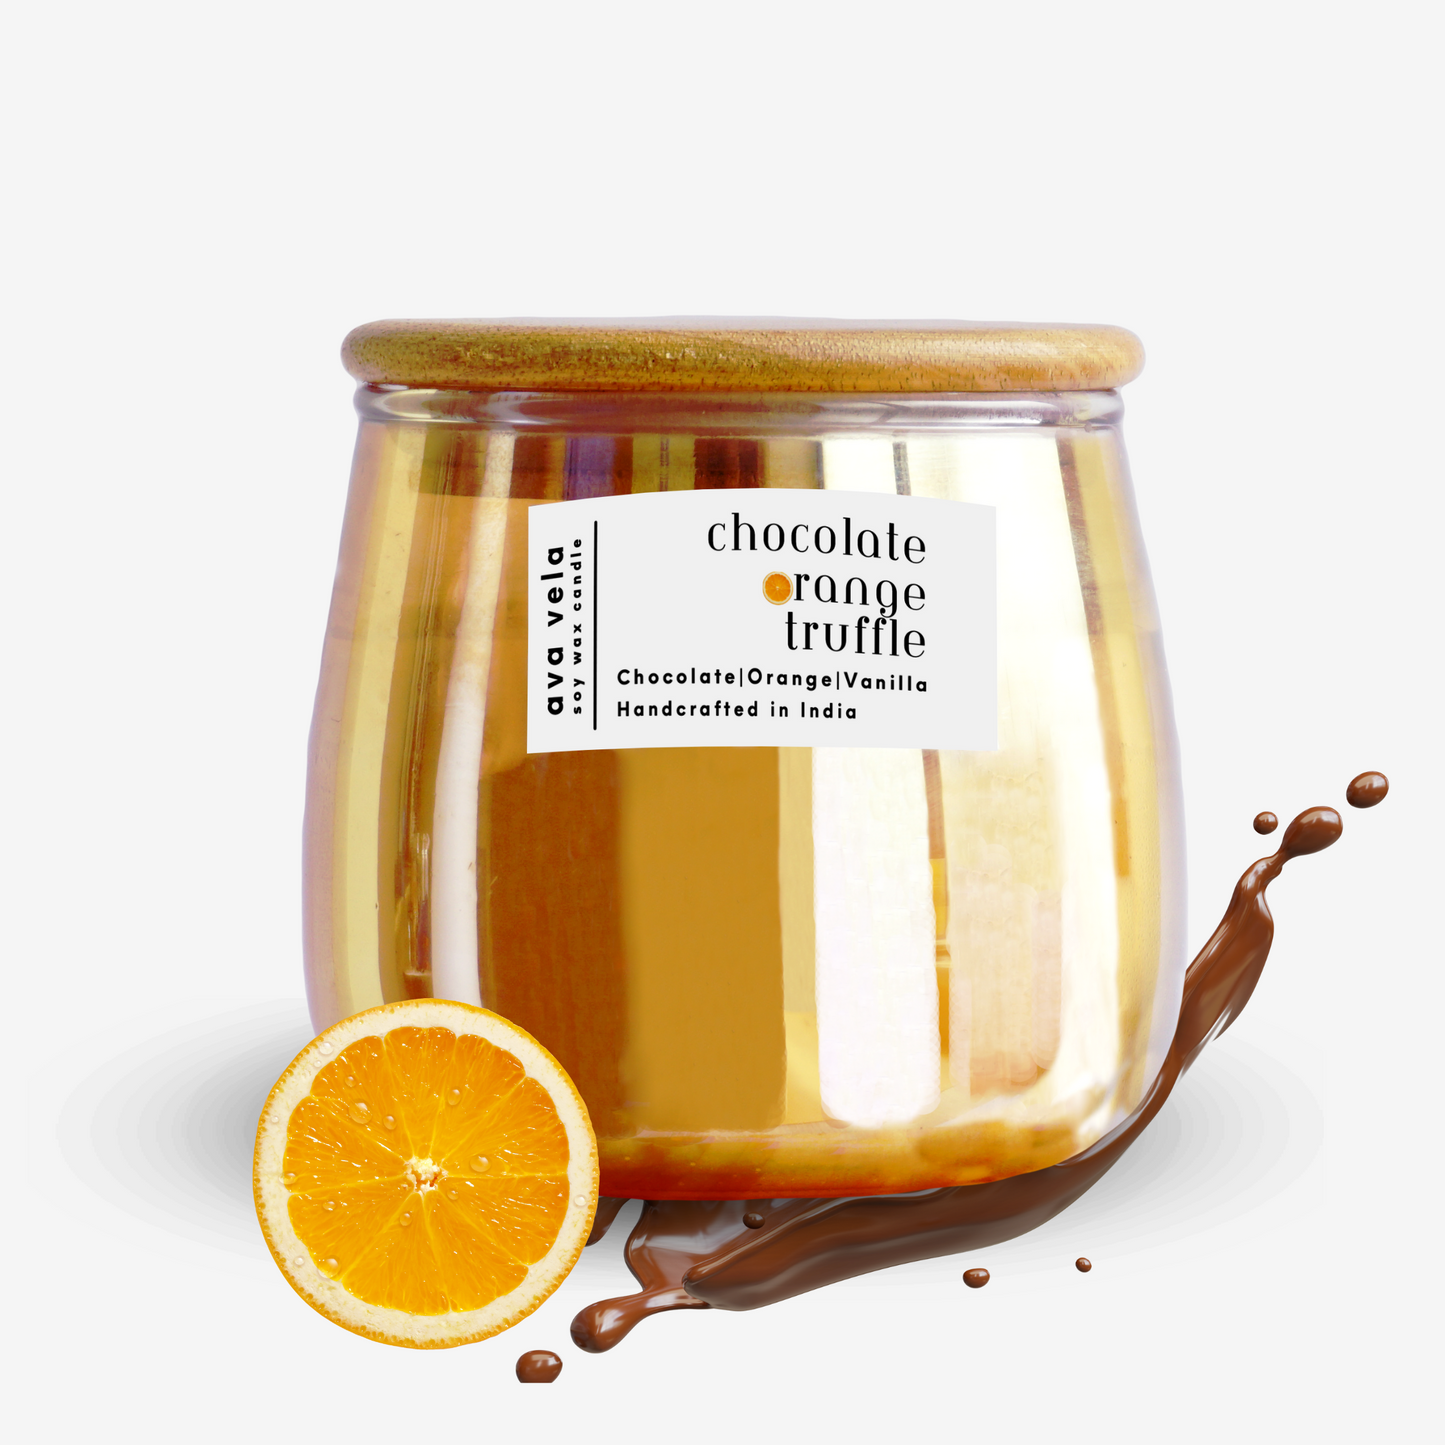 Chocolate Orange Truffle (Chocolate + Orange Zest + Vanilla) Soy Wax Scented Candle 48 Hours Burn Time